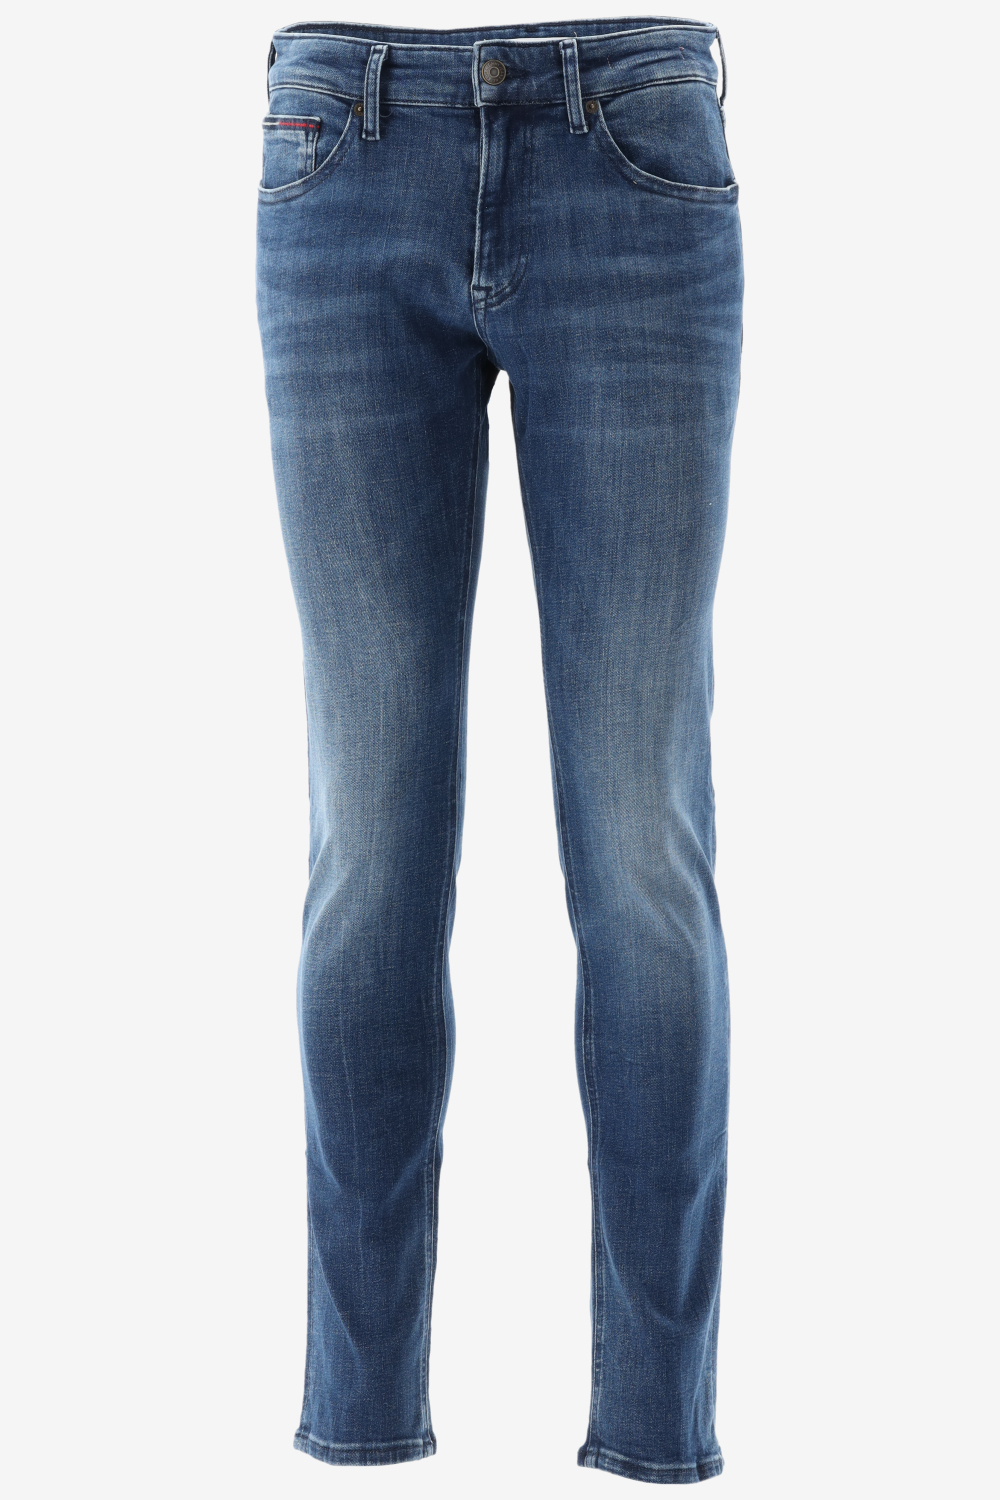 Tommy hilfiger slim fit scanton slim fit jeans maat 30-L36